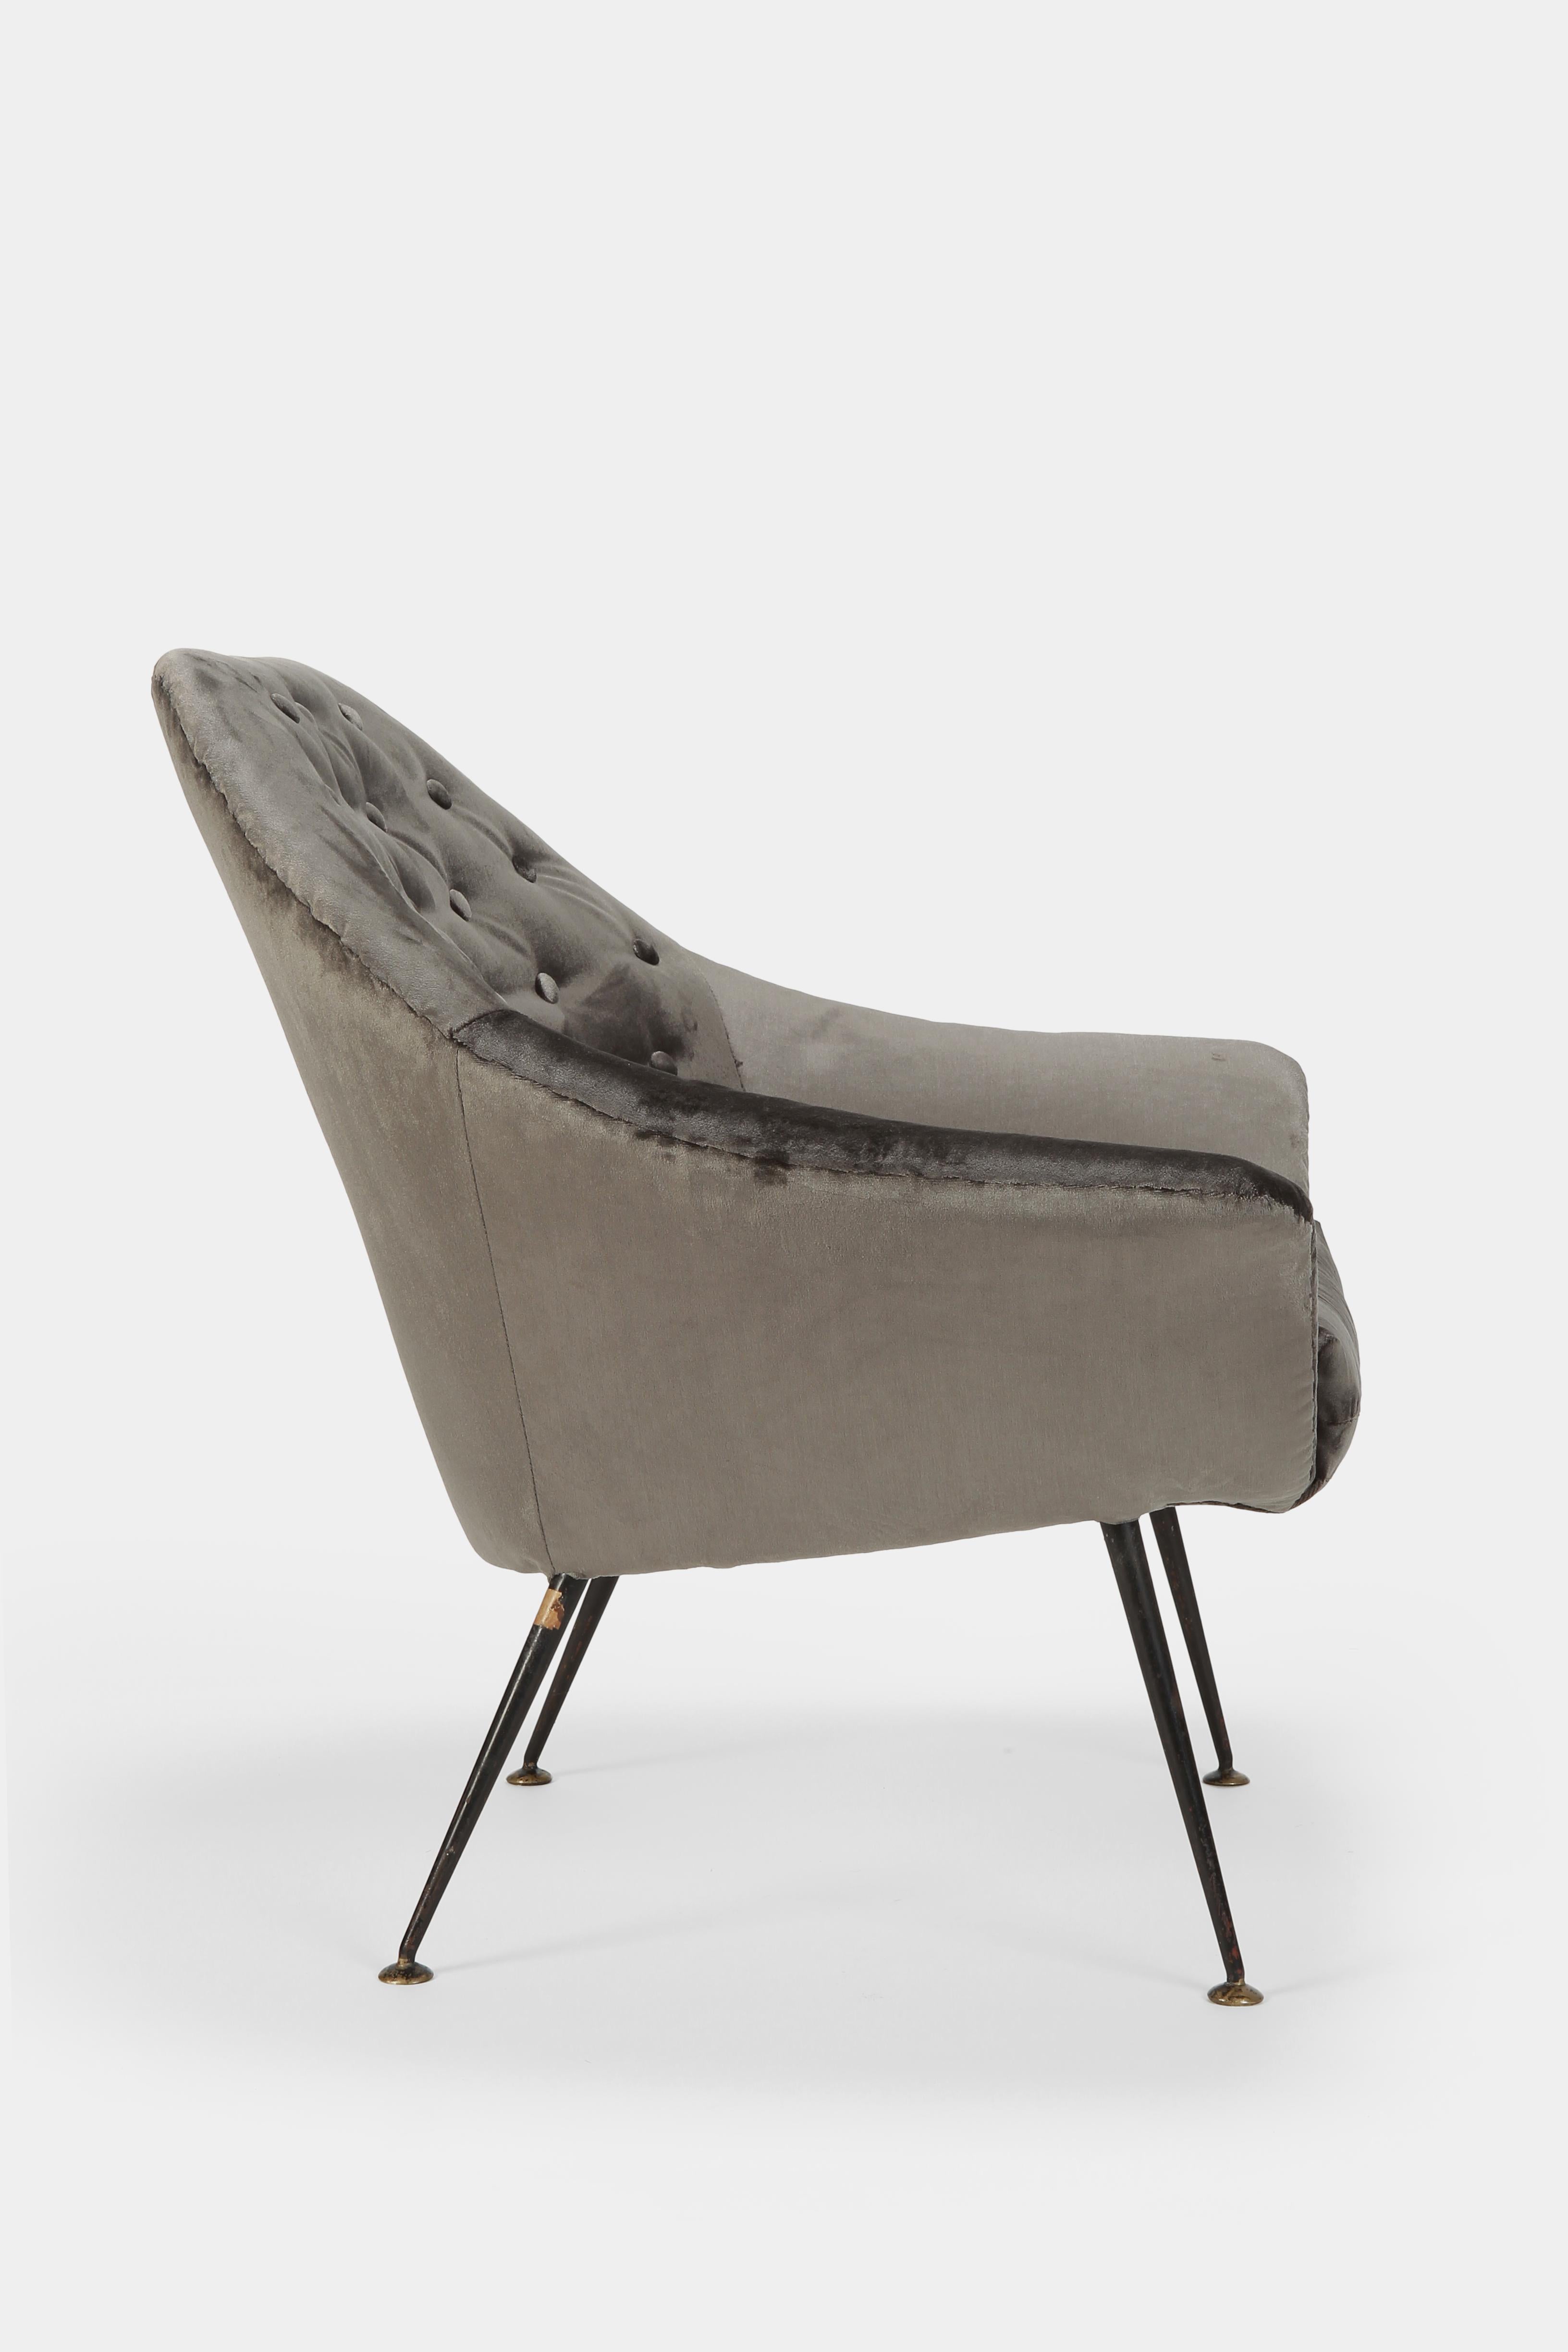 Italian Gastone Rinaldi P43 Rima Velvet Chair, 1950s For Sale